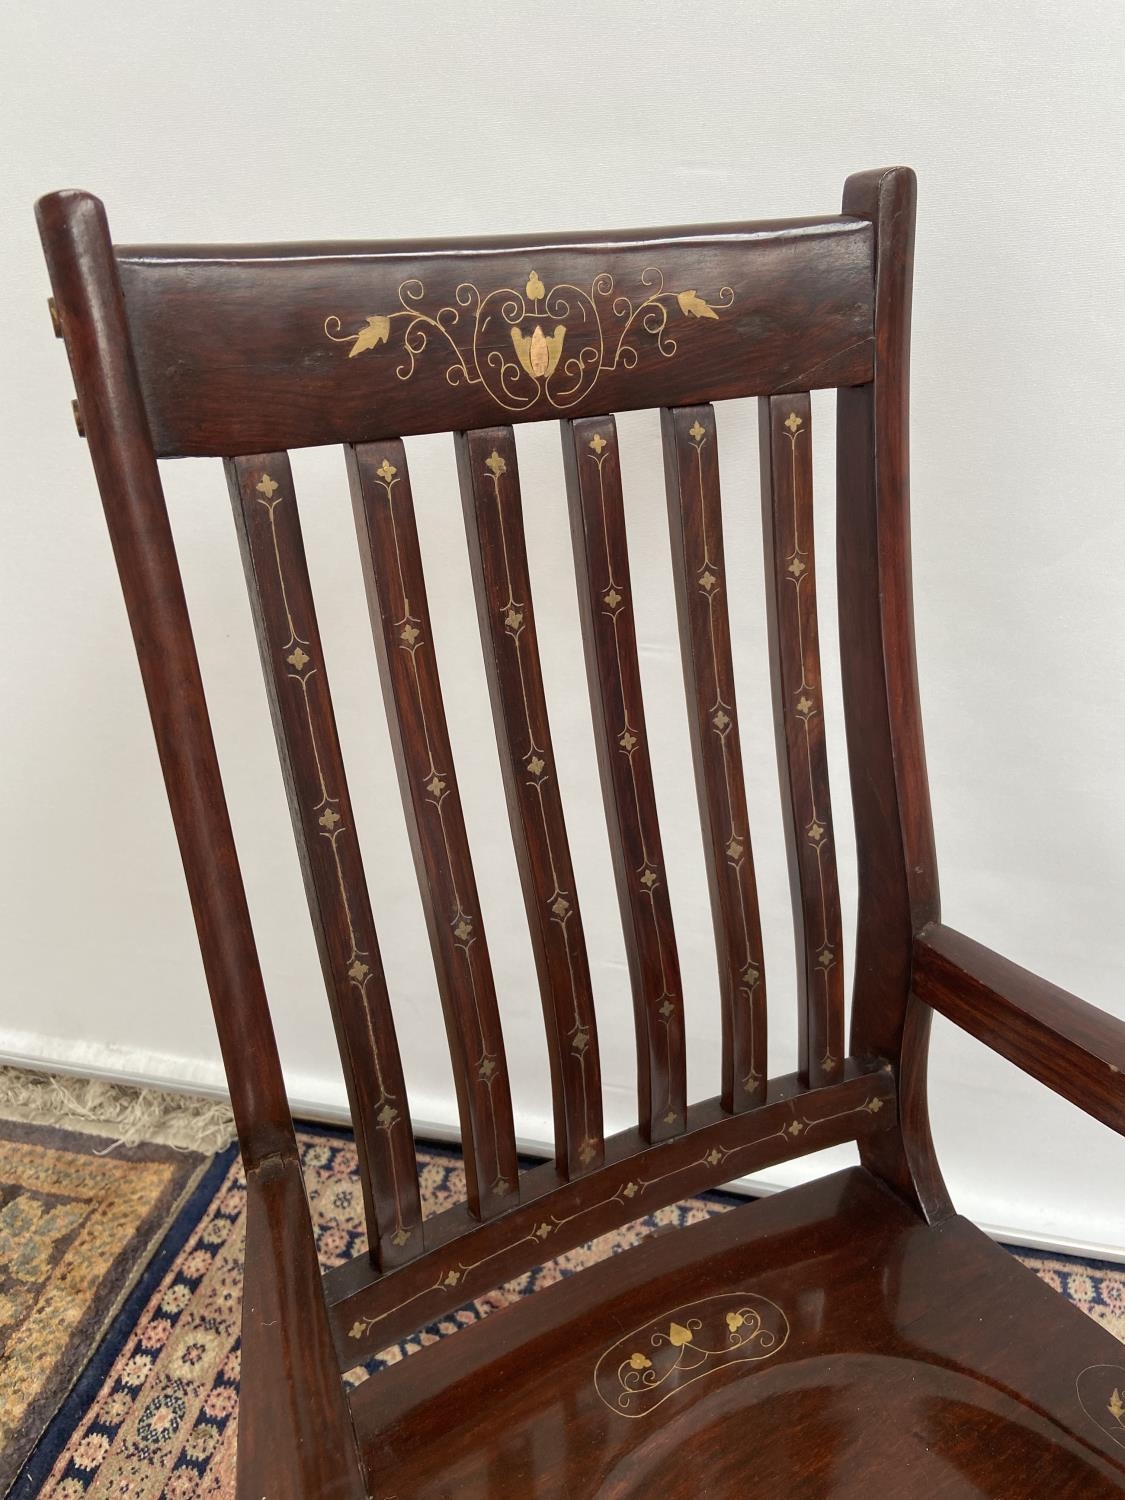 A Hardwood and brass inlaid rocking arm chair. [80x50x40cm] Originally from Saudi Arabia. - Image 2 of 3